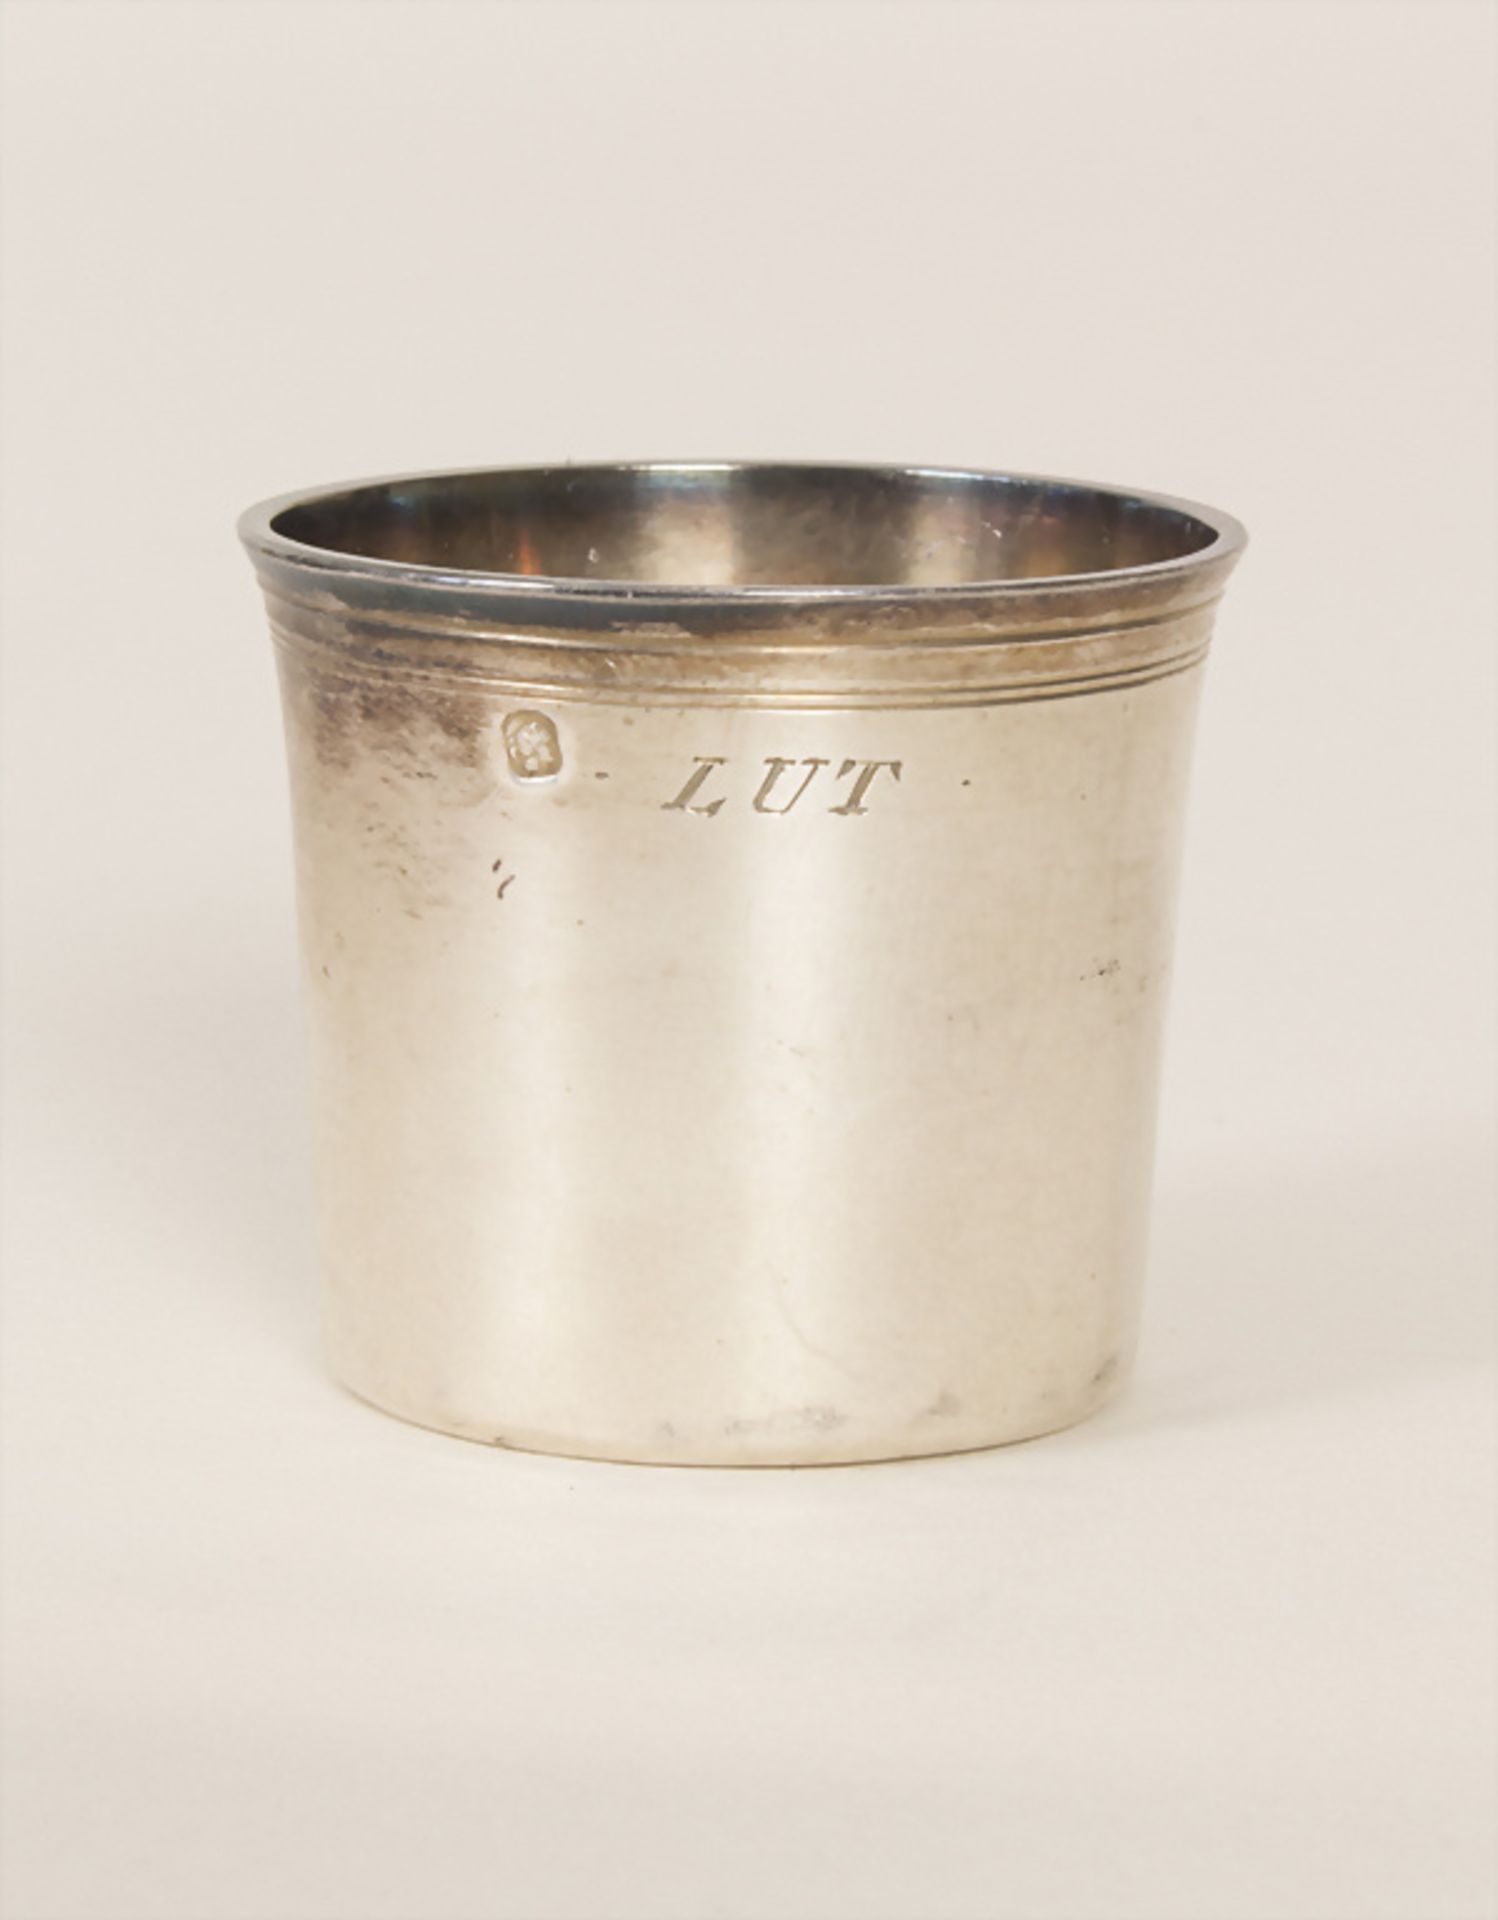 7 Miniatur Empire Becher / 7 miniature Empire silver beaker, Louis-Jacques Berger, Paris, um 1810 - Image 2 of 7